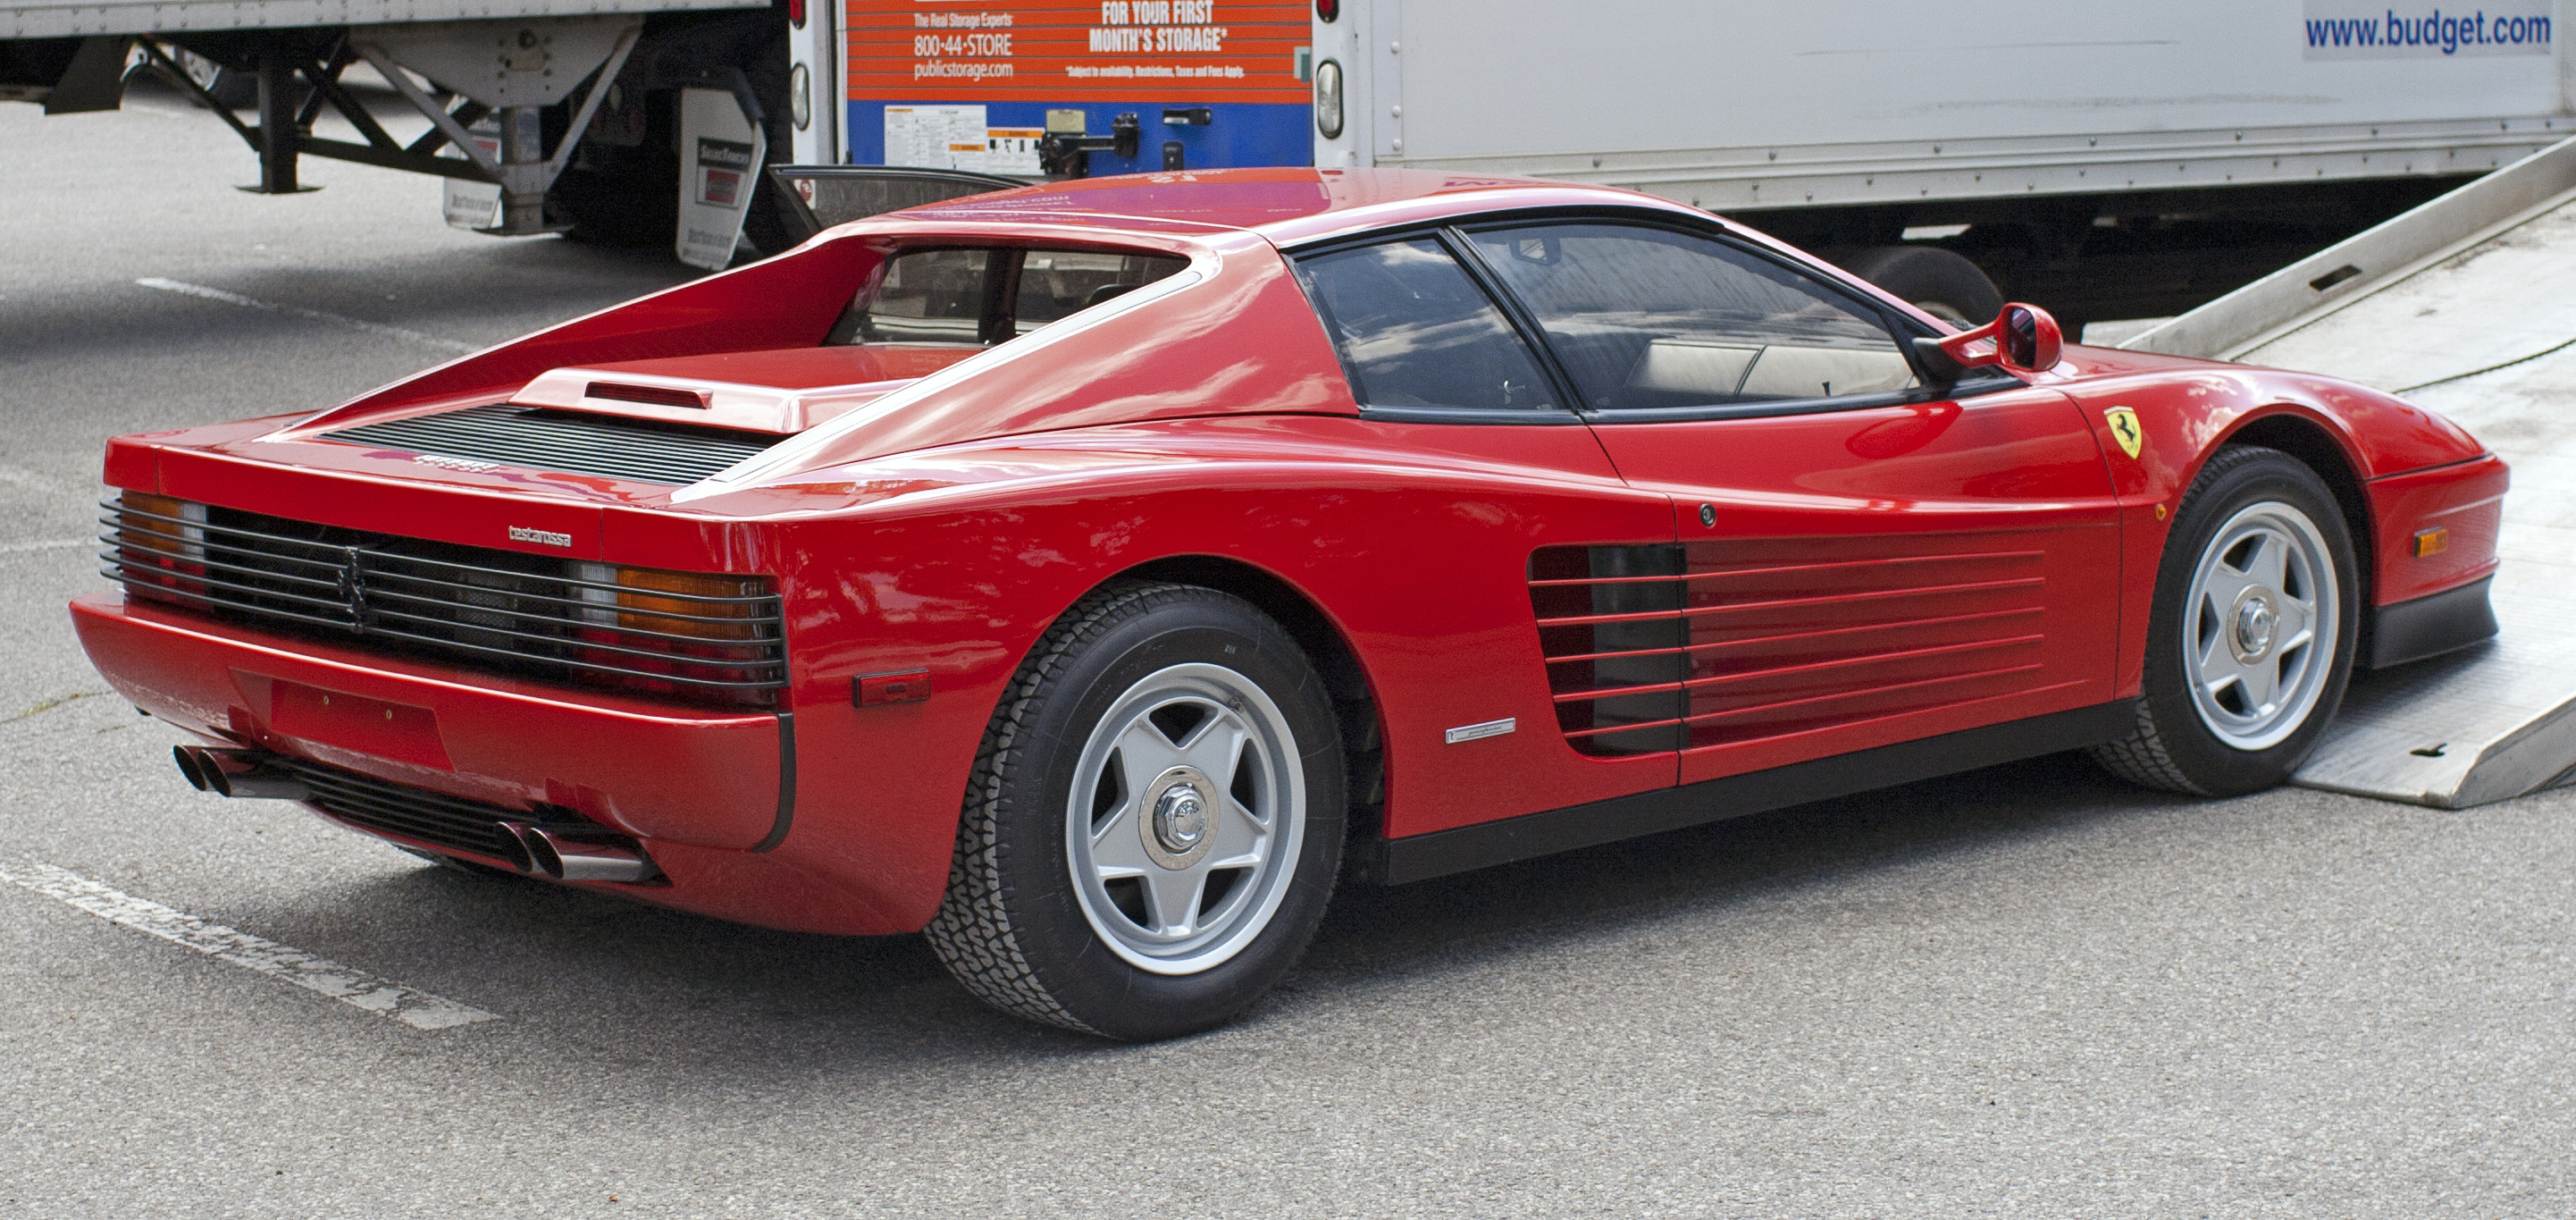 2883x1365 > Ferrari Testarossa Wallpapers